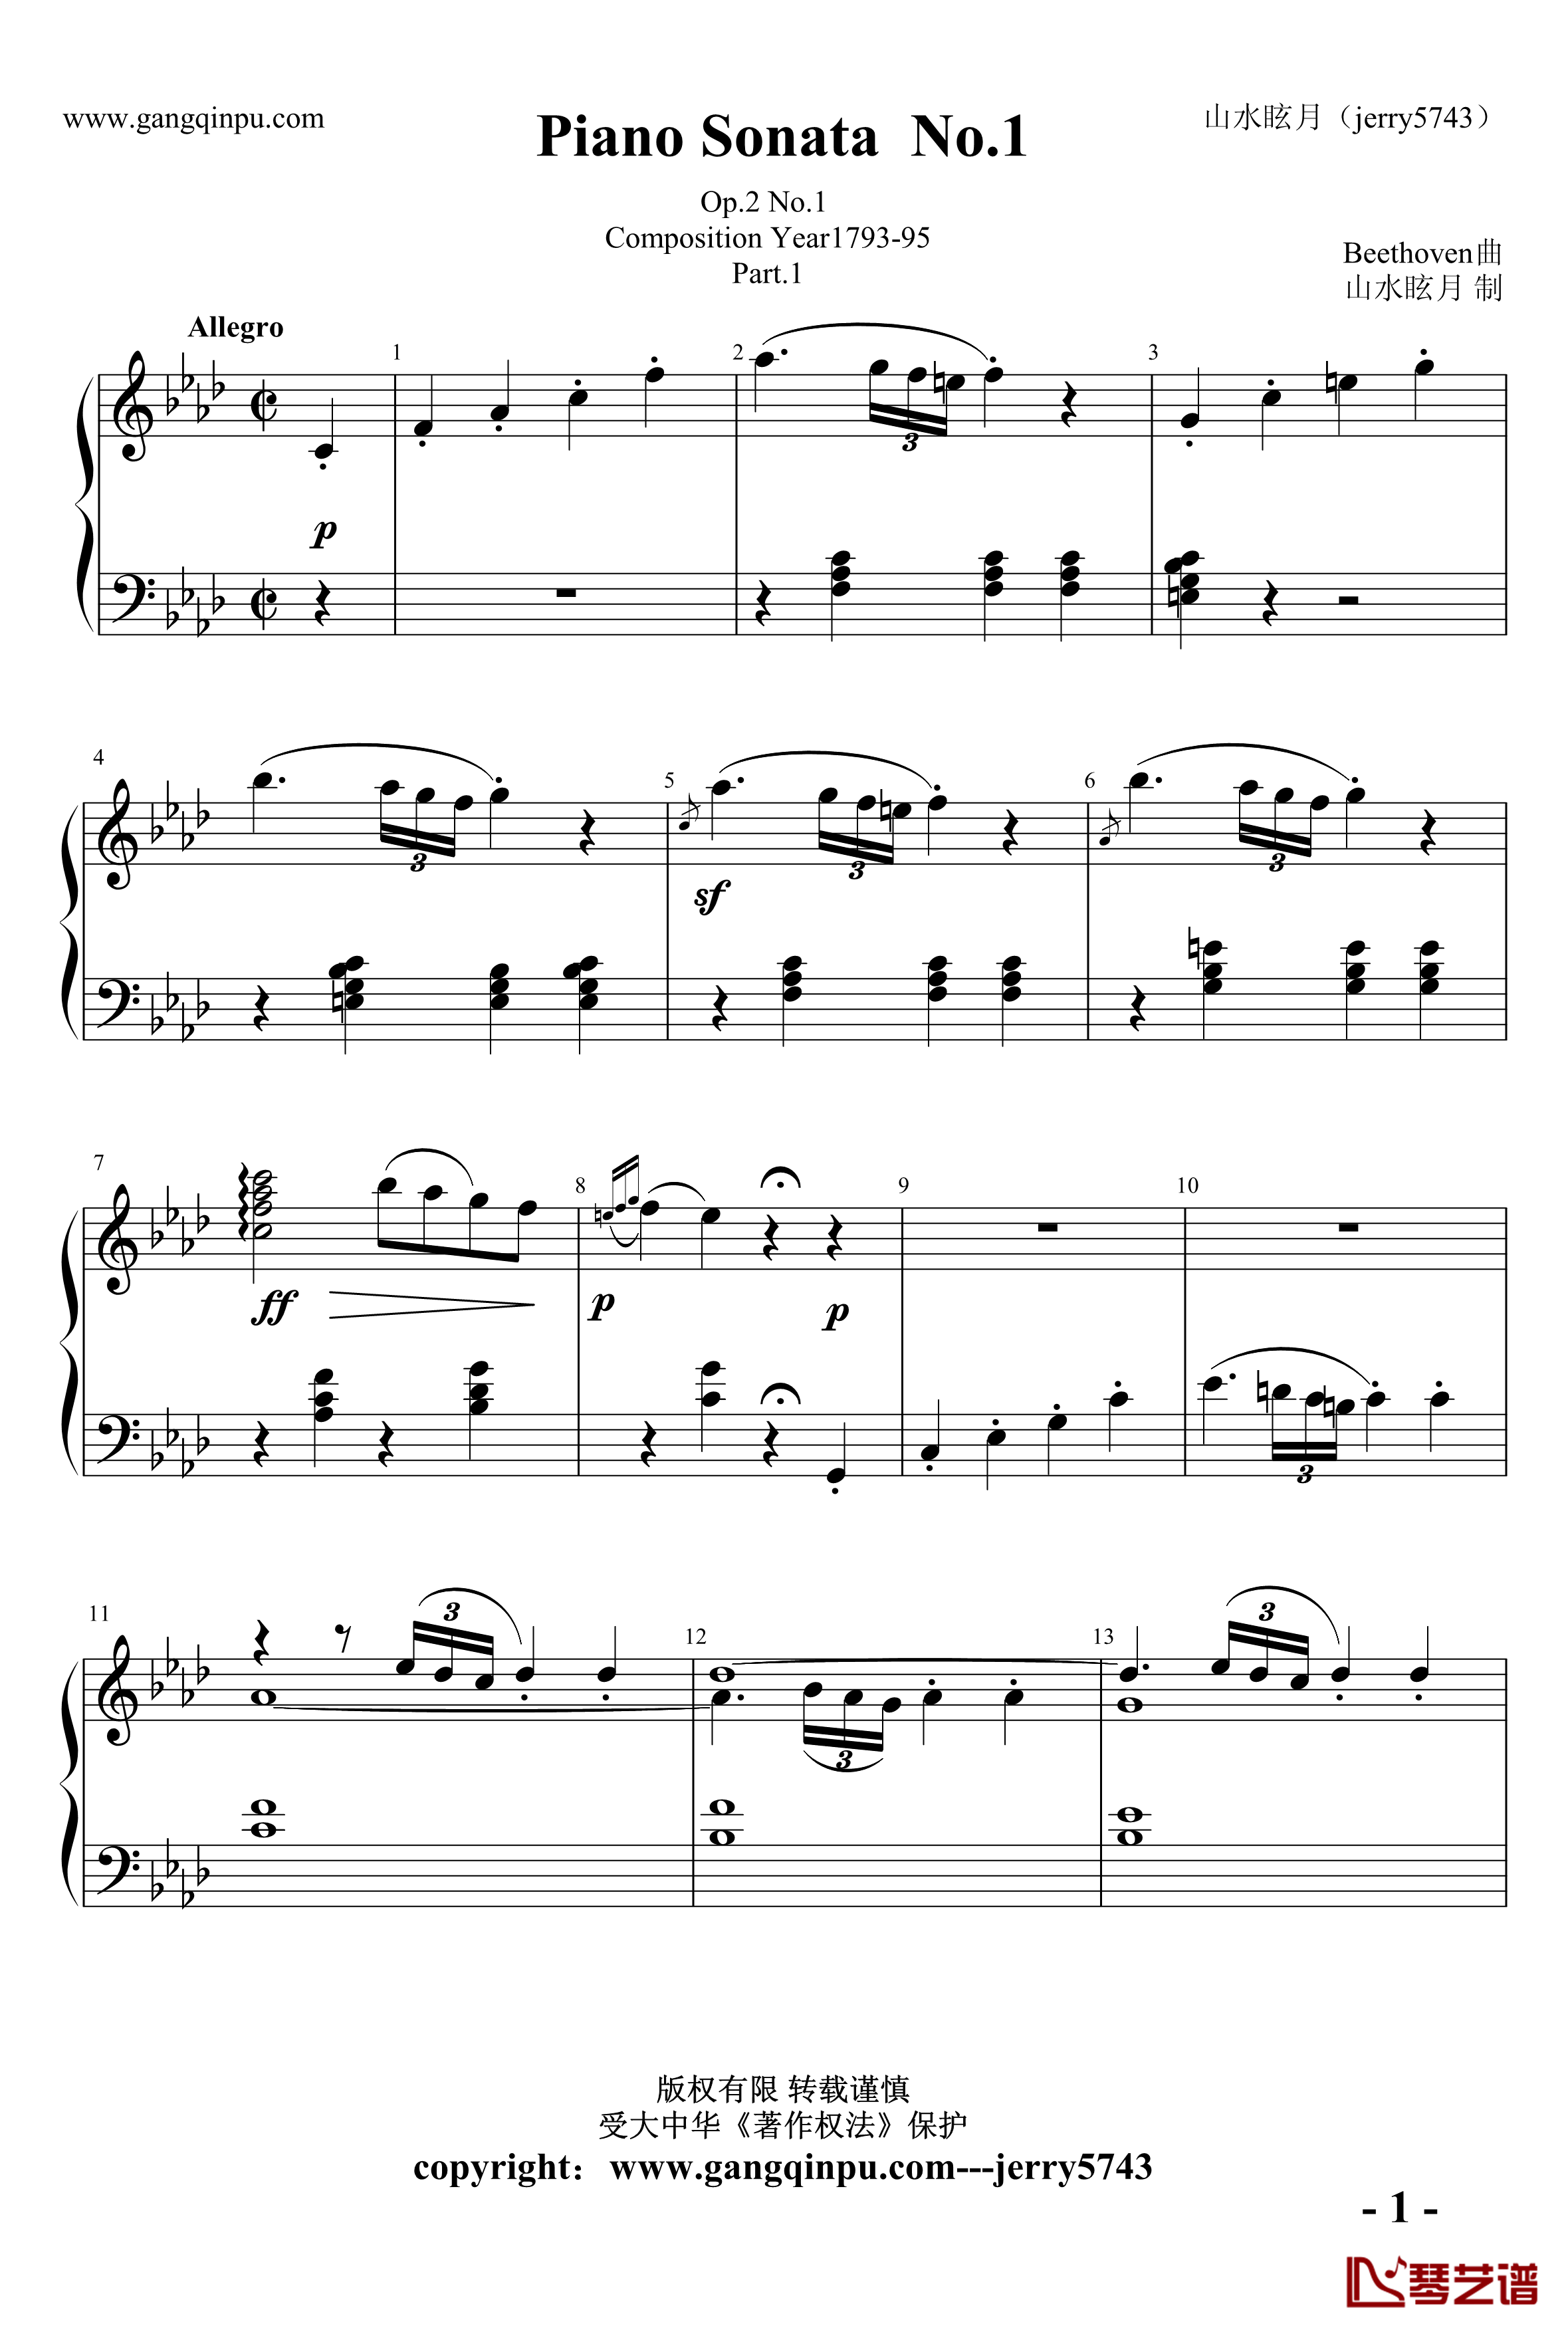 Piano Sonata No 1 part 1钢琴谱-贝多芬-beethoven1